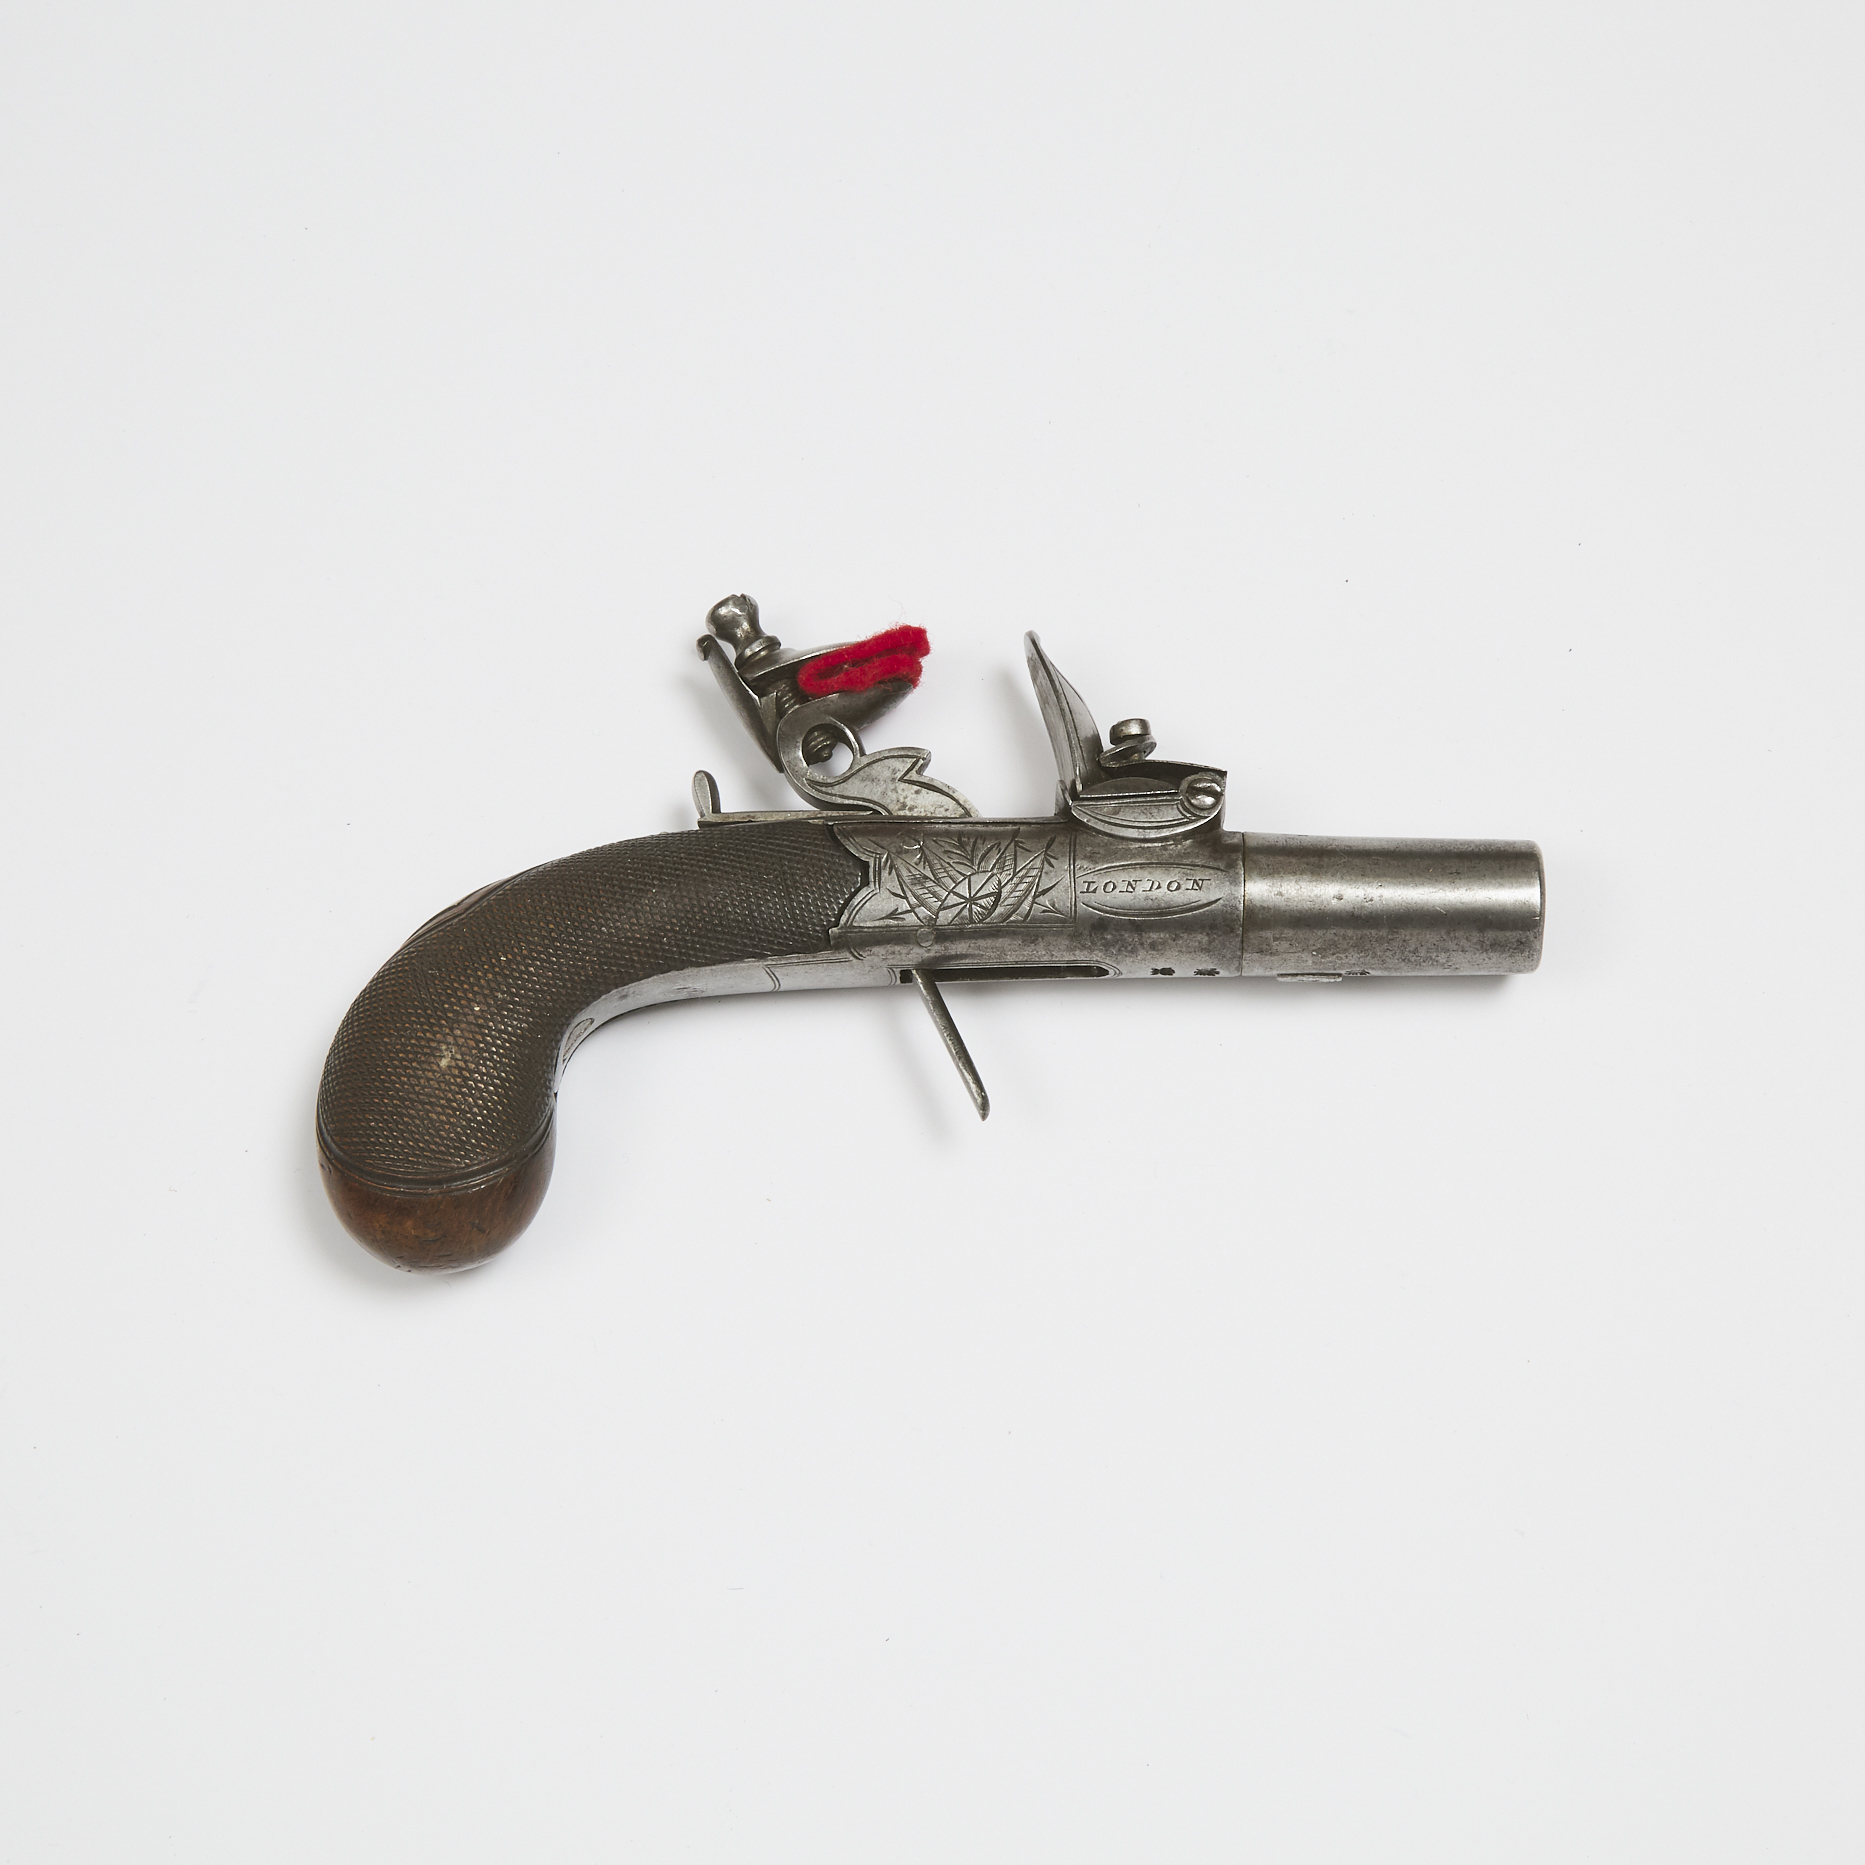 British Flint-Boxlock Pocket Pistol, Phillips, London, early 19th century